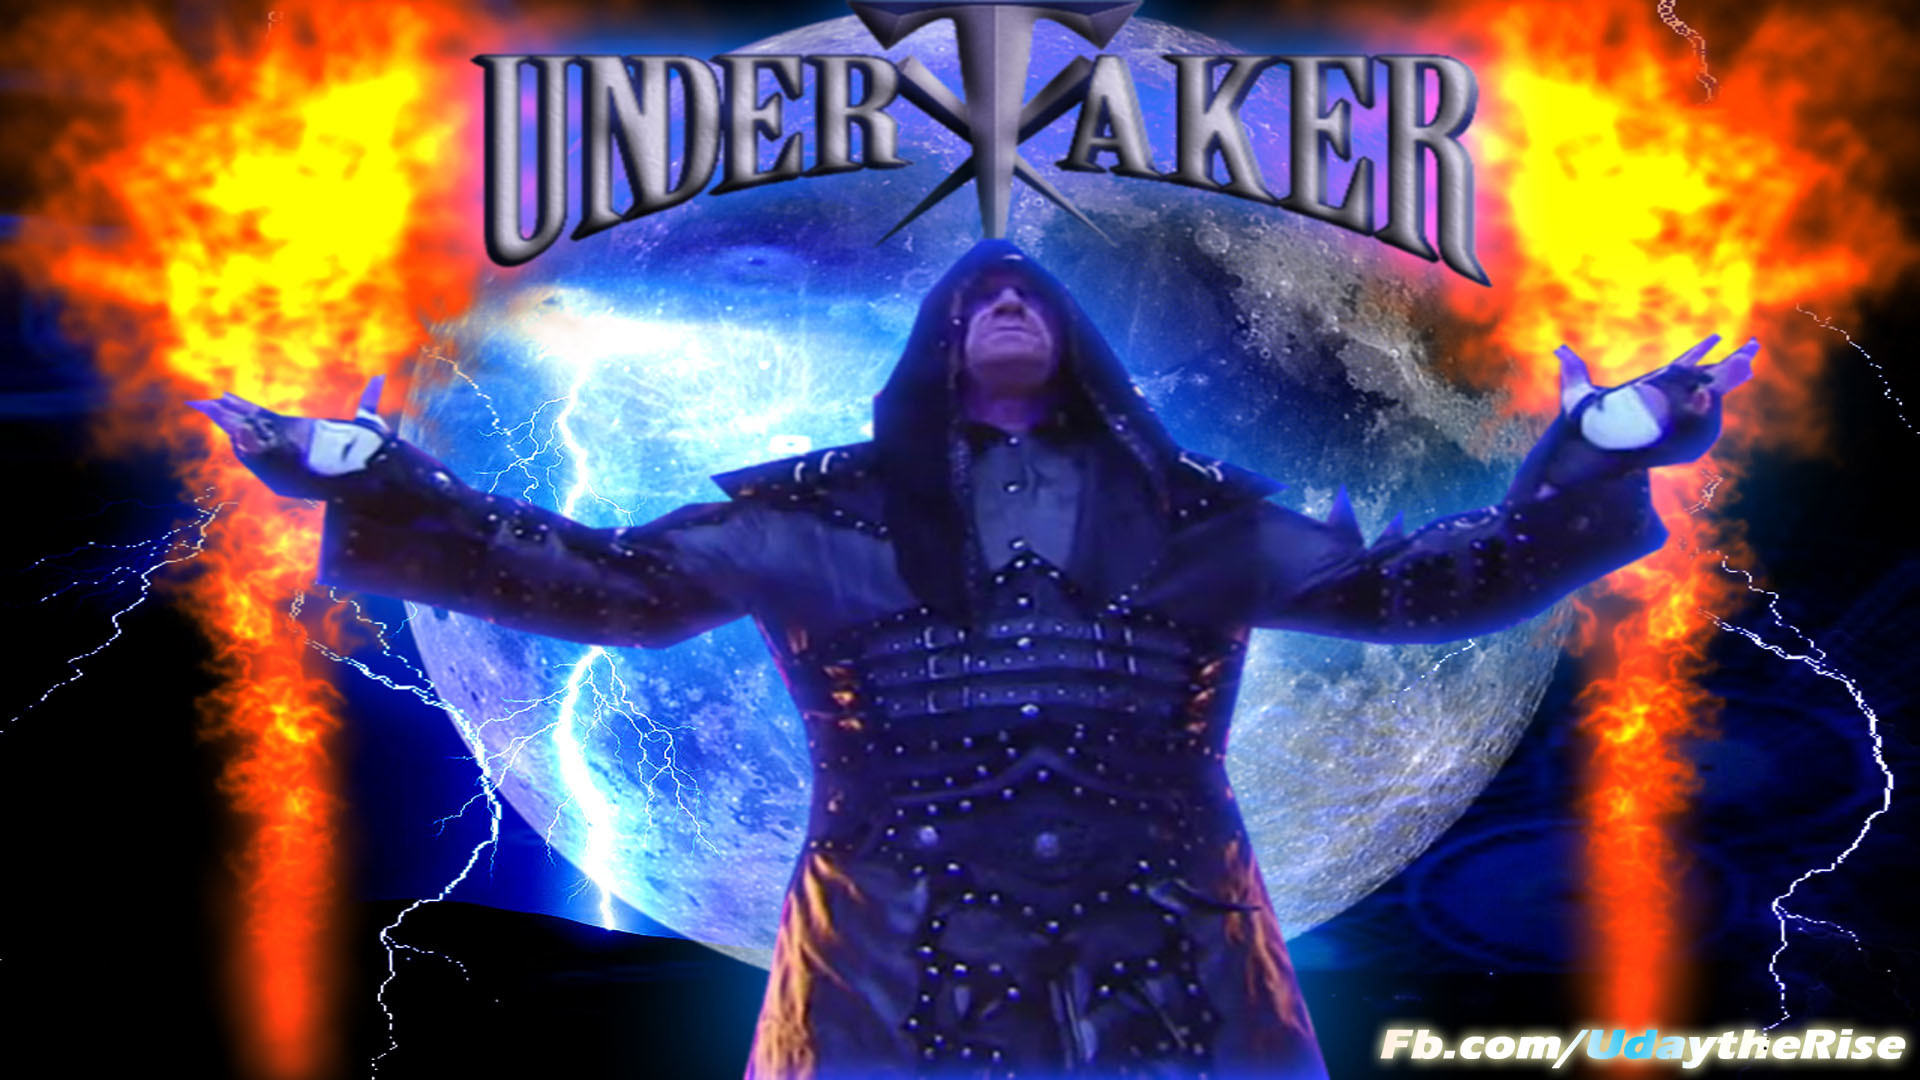 Wwe Undertaker Wallpaper Image